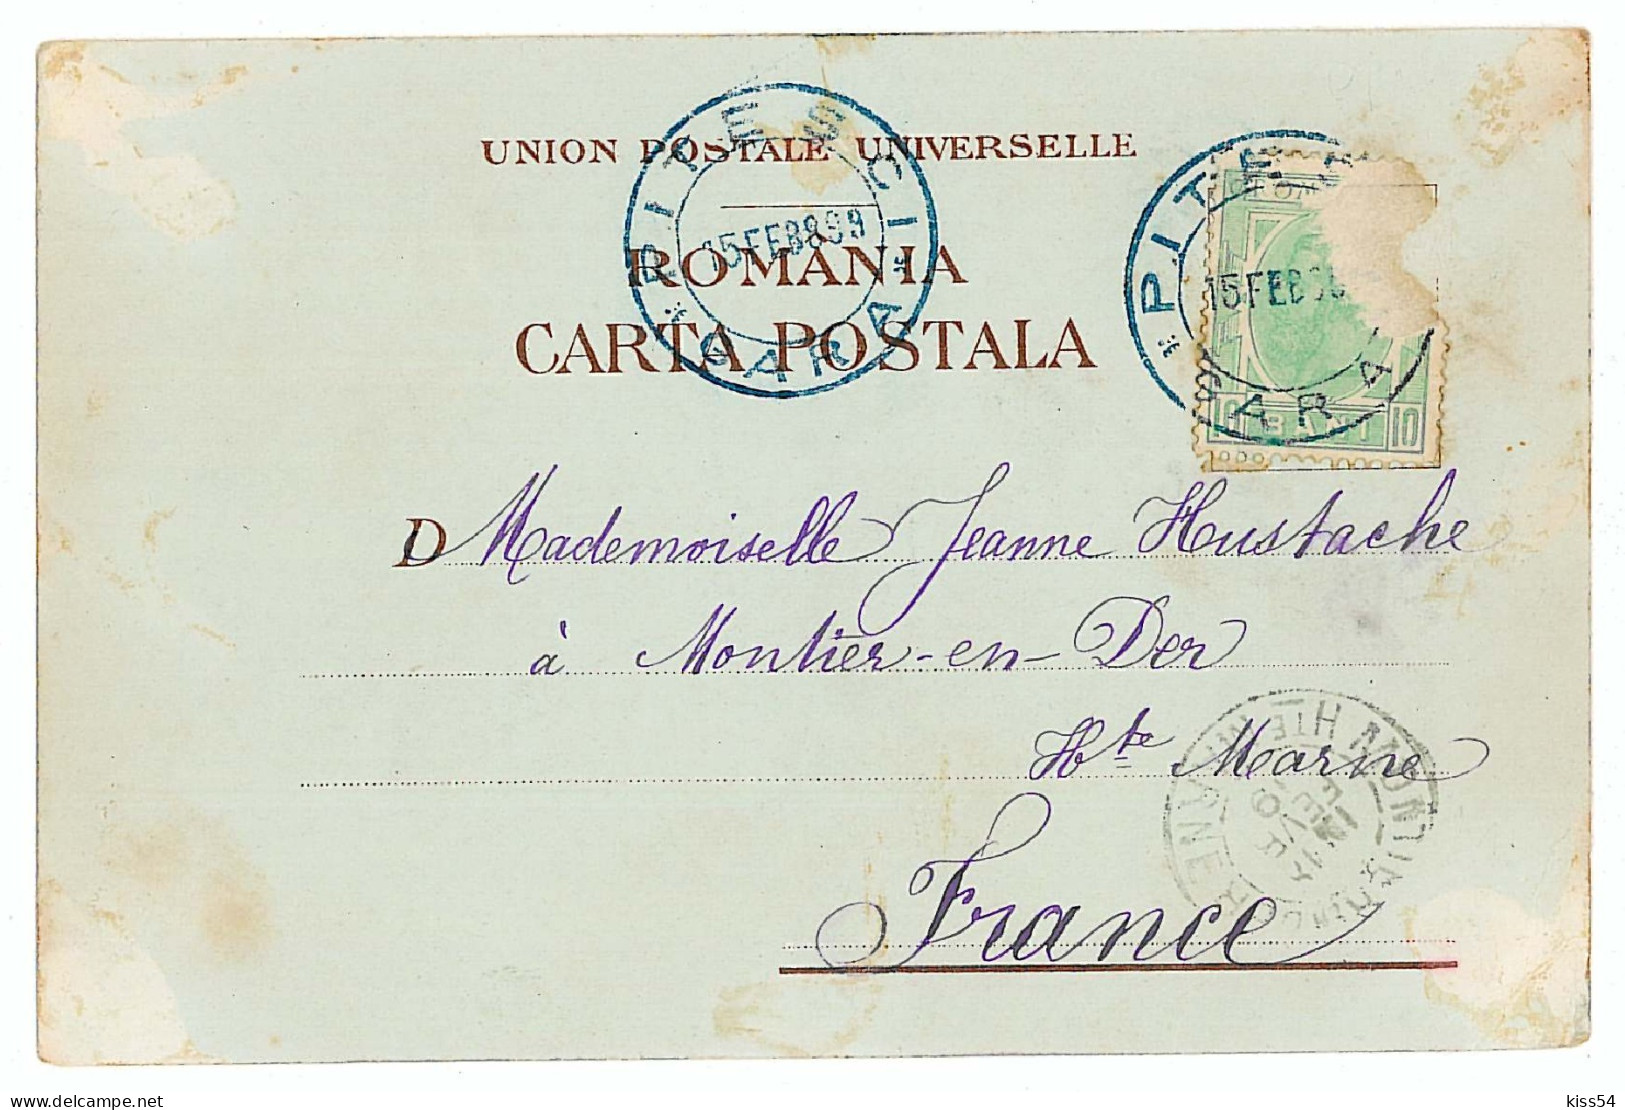 RO 72 - 8432 Princess ELISABETH, Litho, Regale, Royalty, Romania - Old Postcard - Used - 1899 - Rumänien